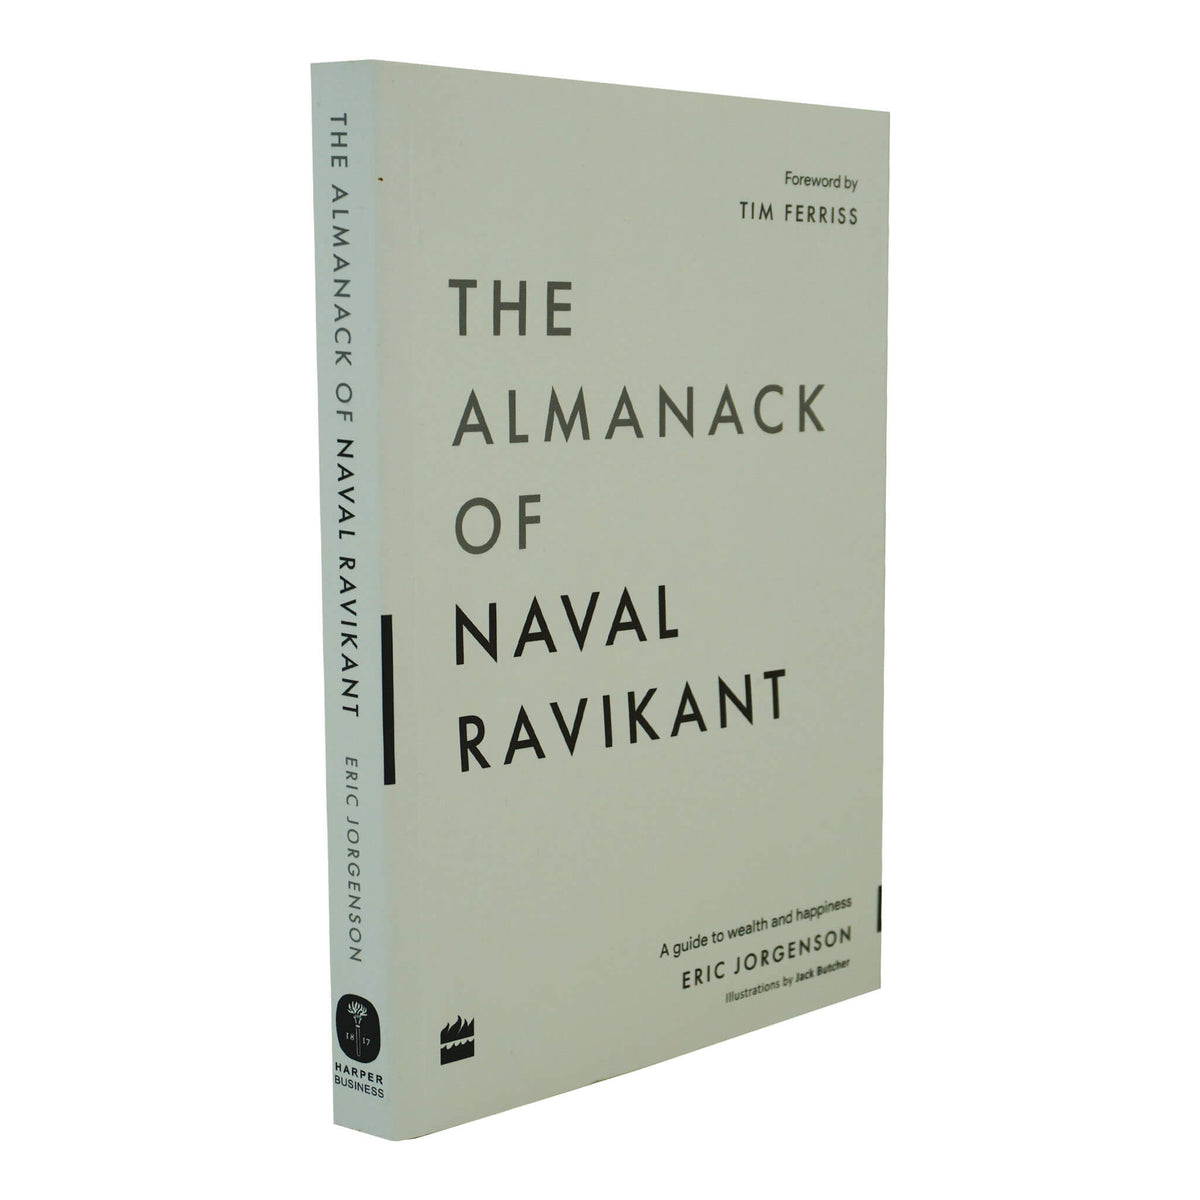 The Almanack Of Naval Ravikant by Eric Jorgenson - Bookbins